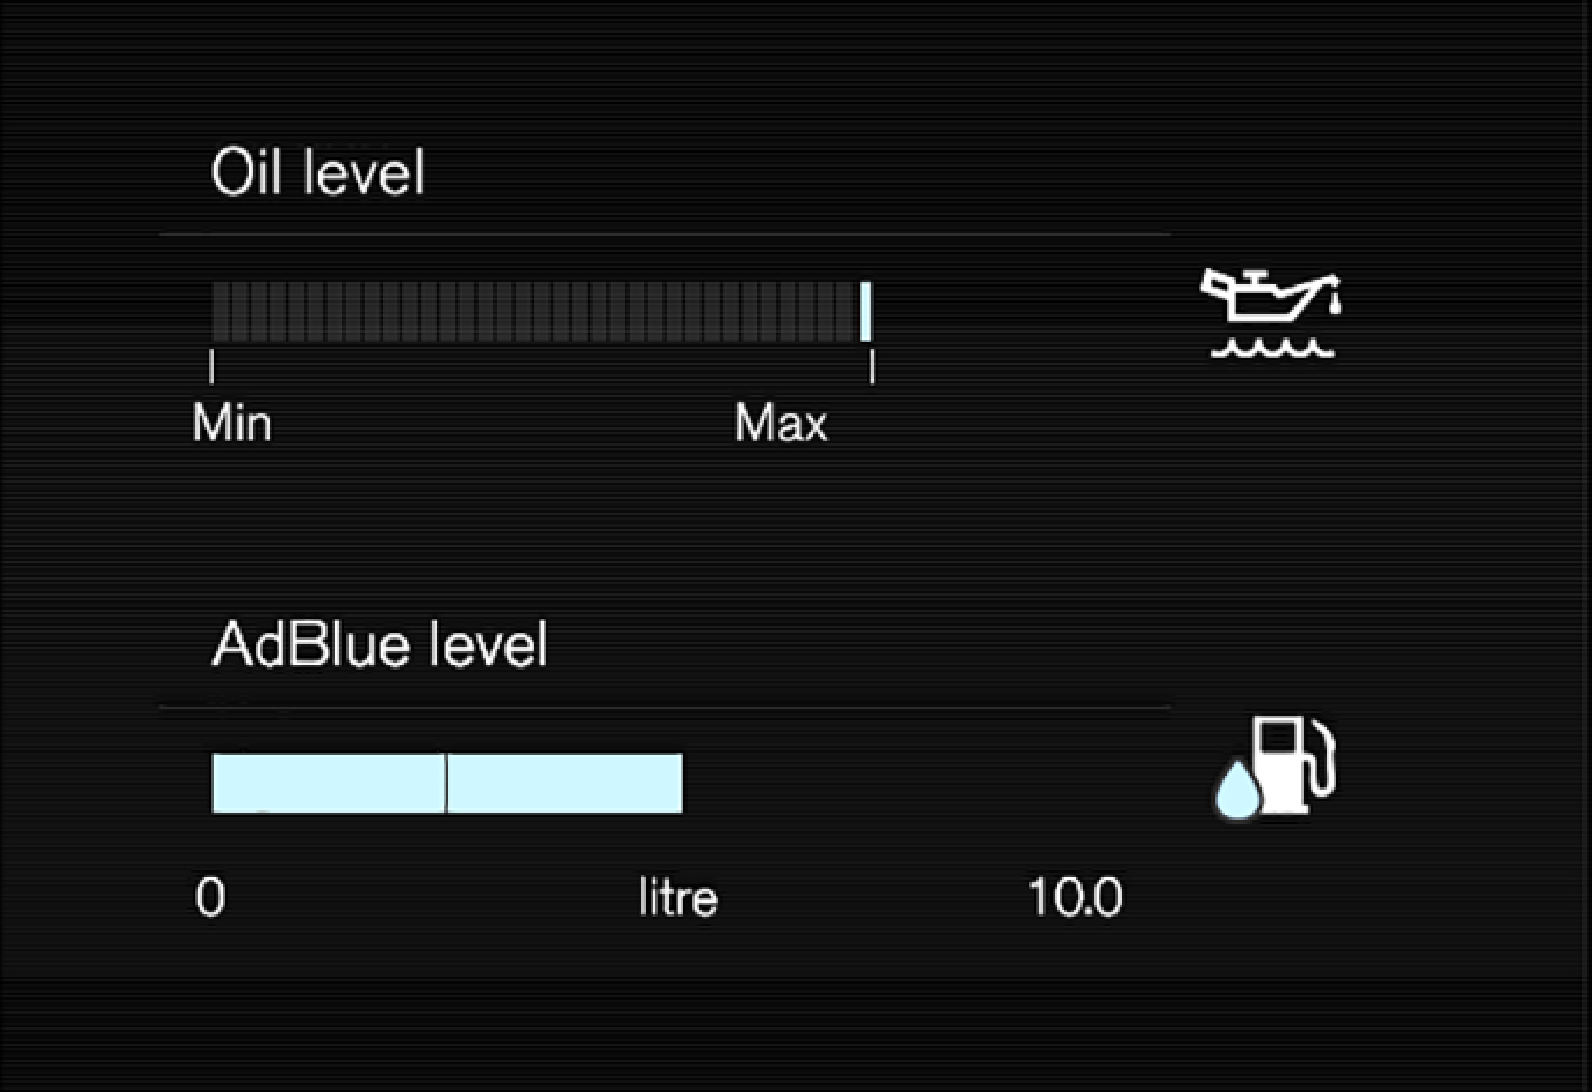 18w09 - Supportsite - Graphic for AdBlue level centerdisplay